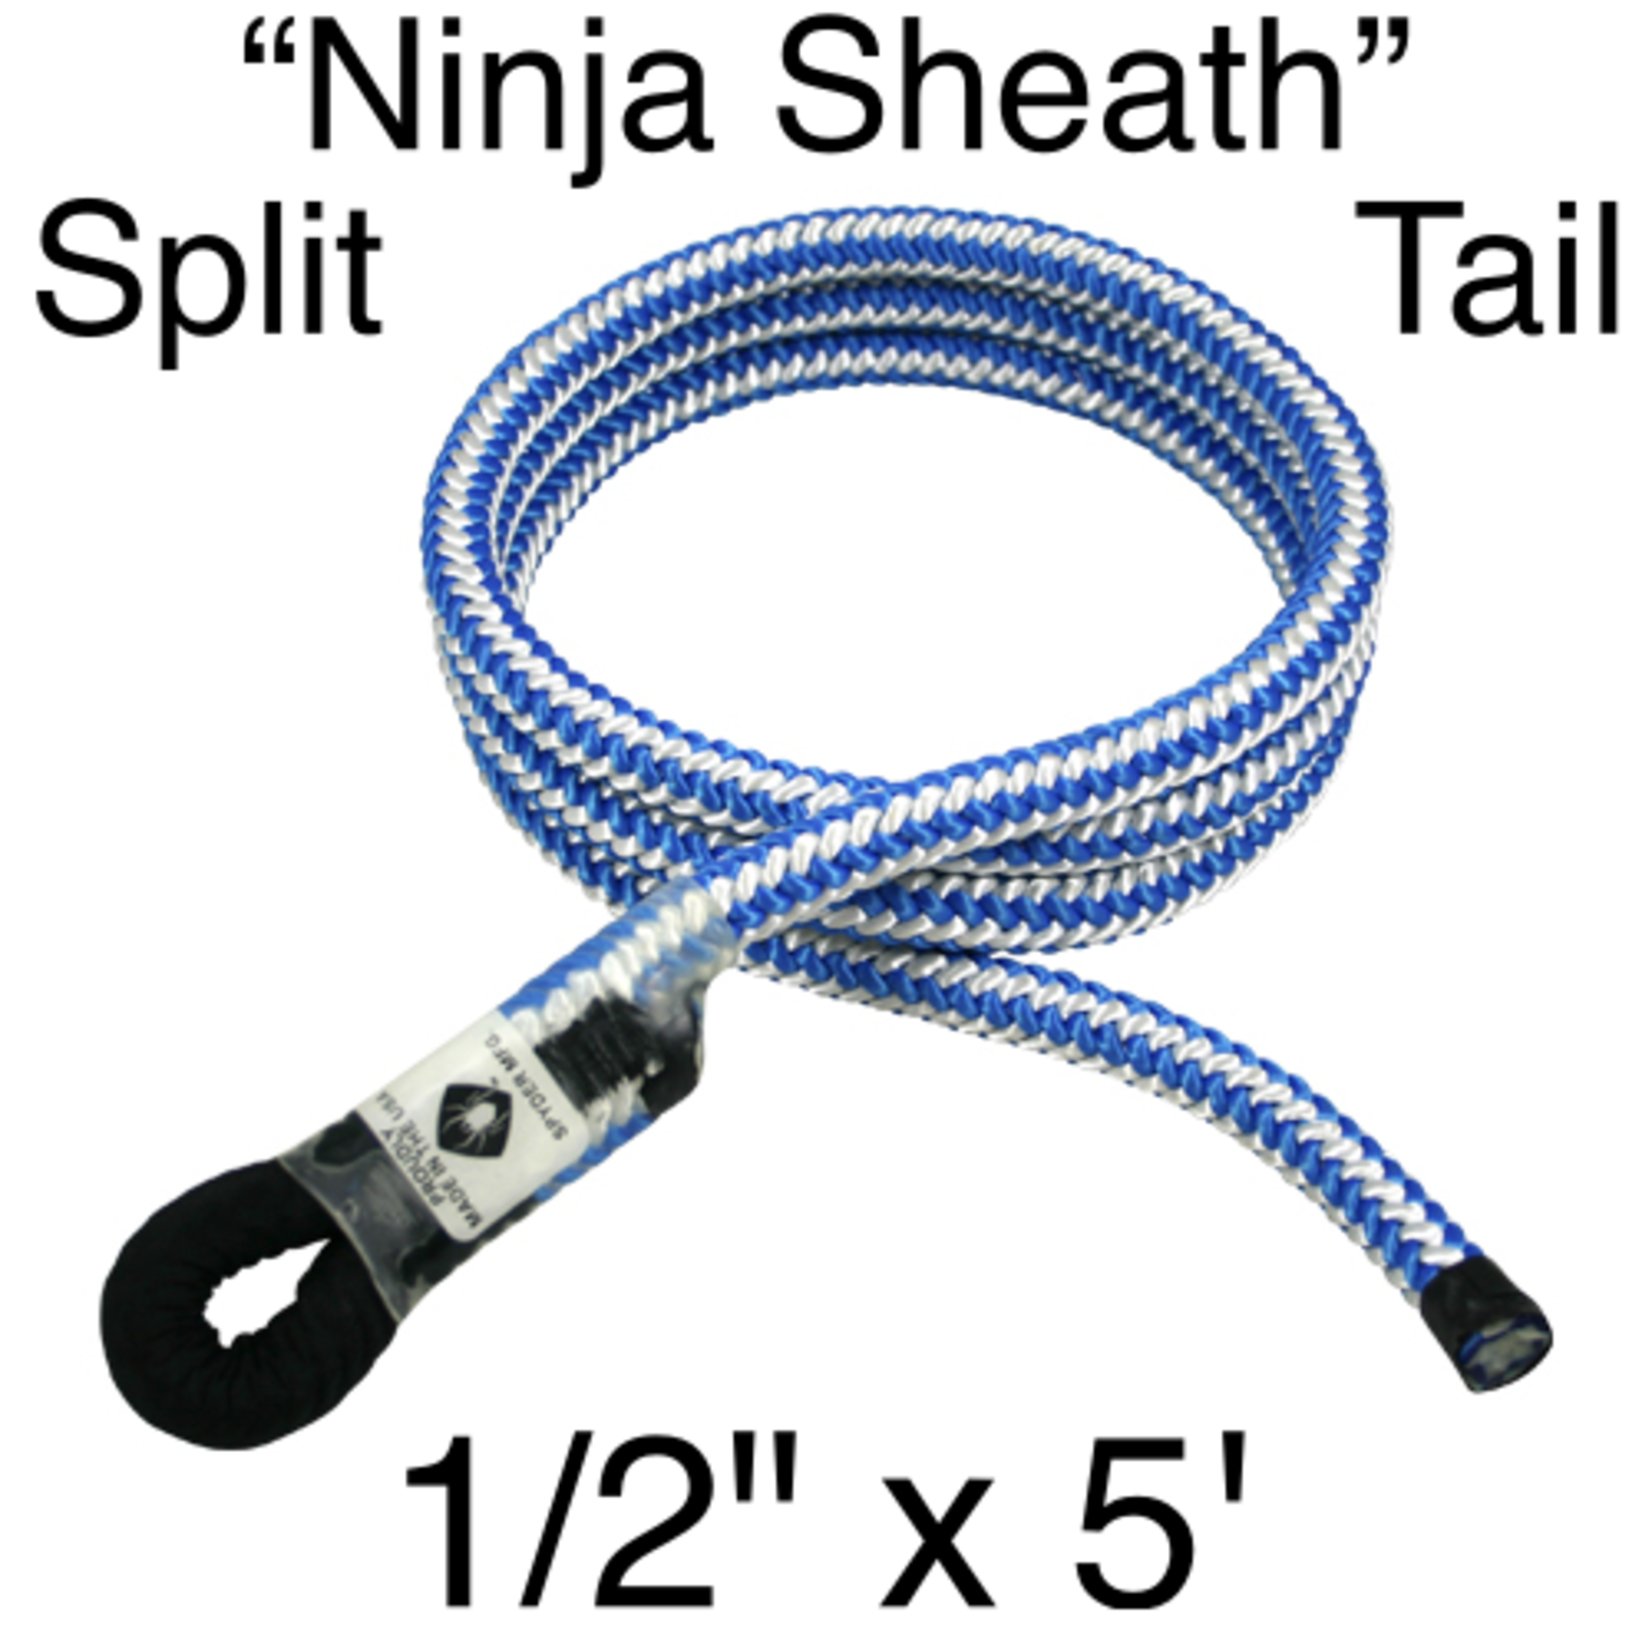 Spyder Manufacturing Split Tail "Ninja Sheath" 1/2" x 5' (60) Blue & White